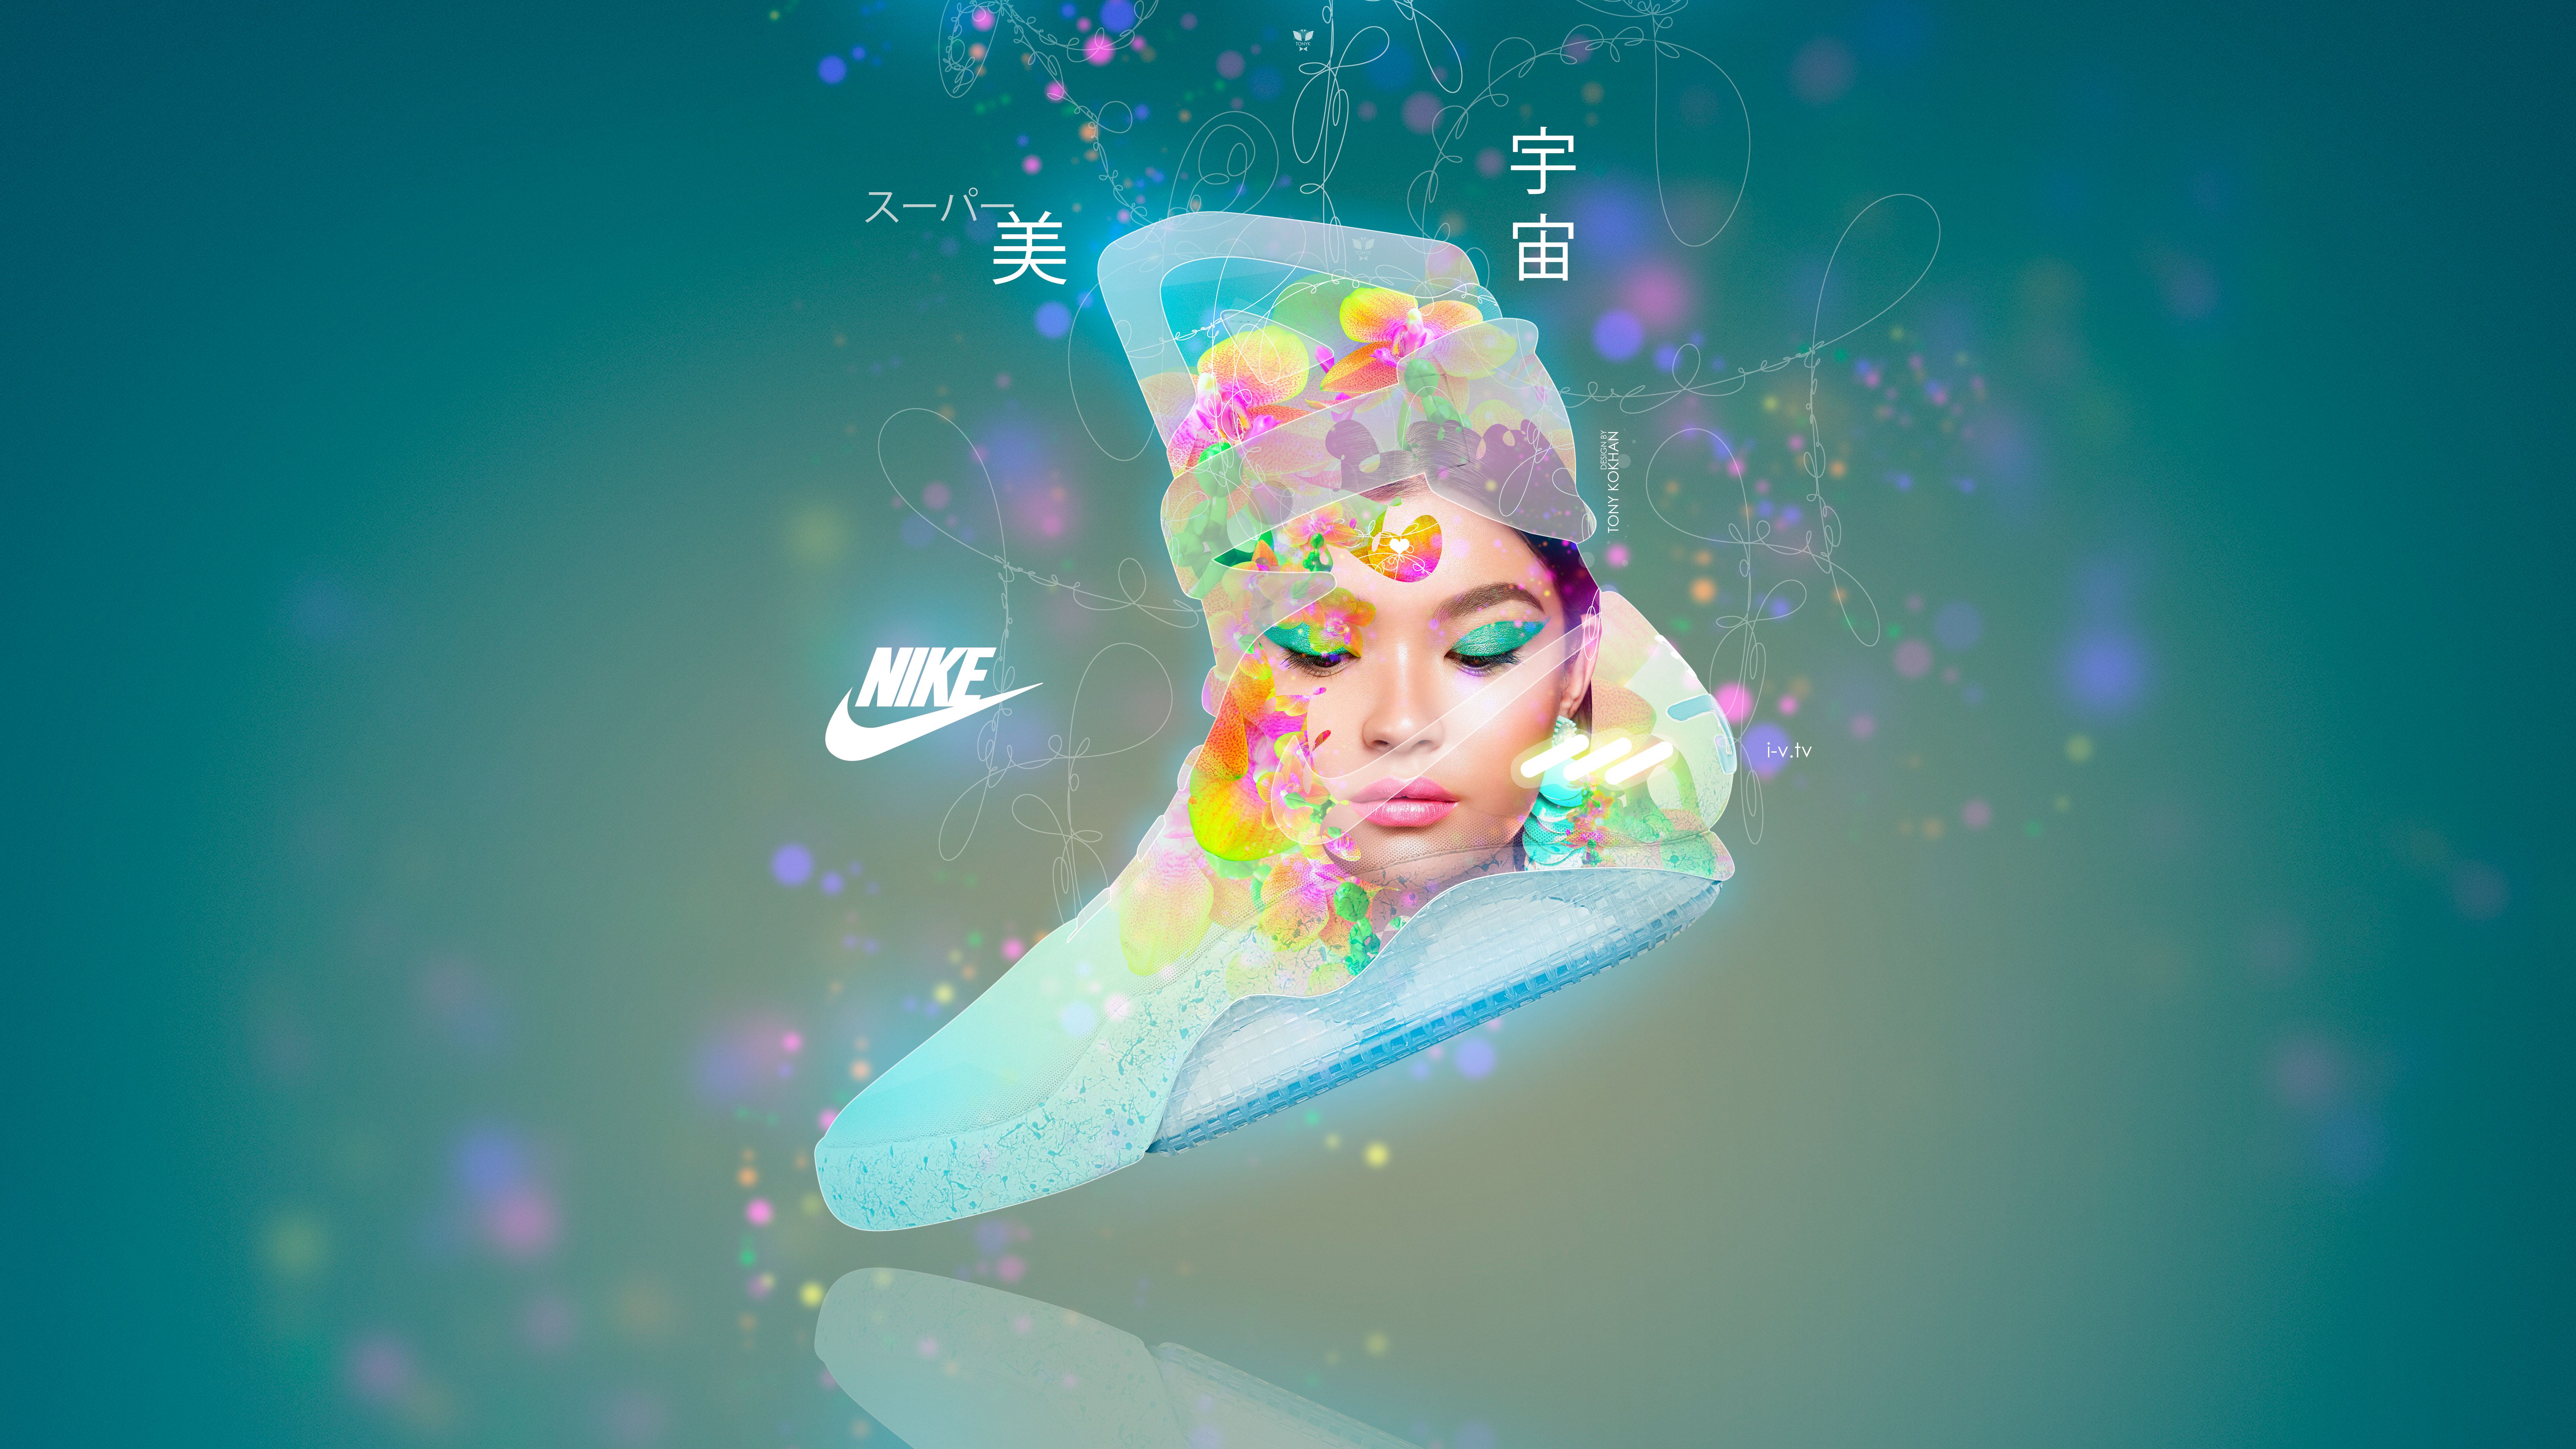 Nike - HD Wallpaper 